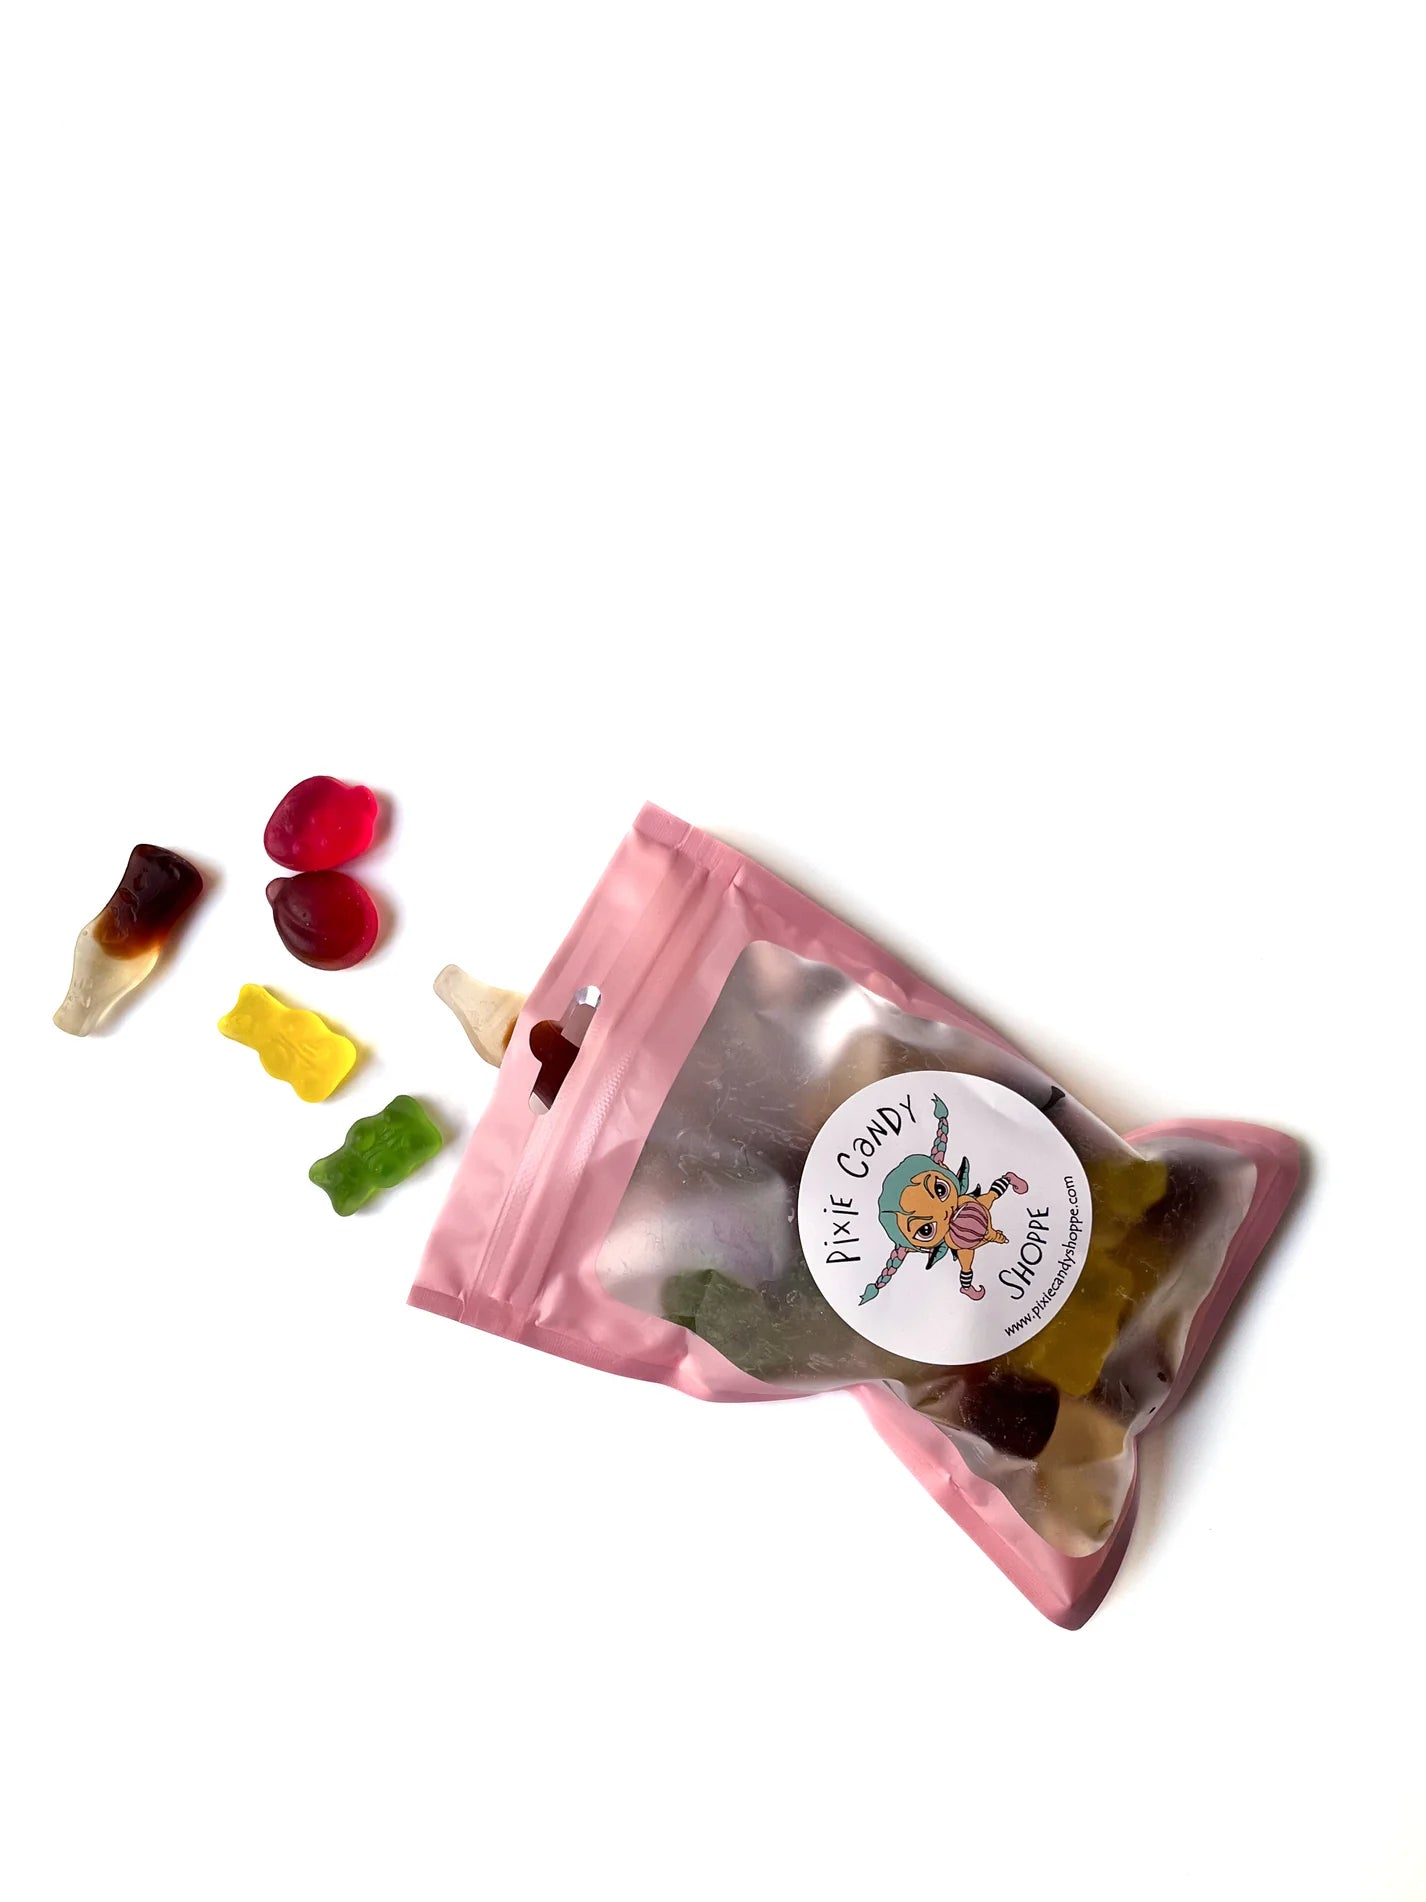 Pixie Sugar Free Mix - Small Wholesale (6 bag min, 3.75 each)